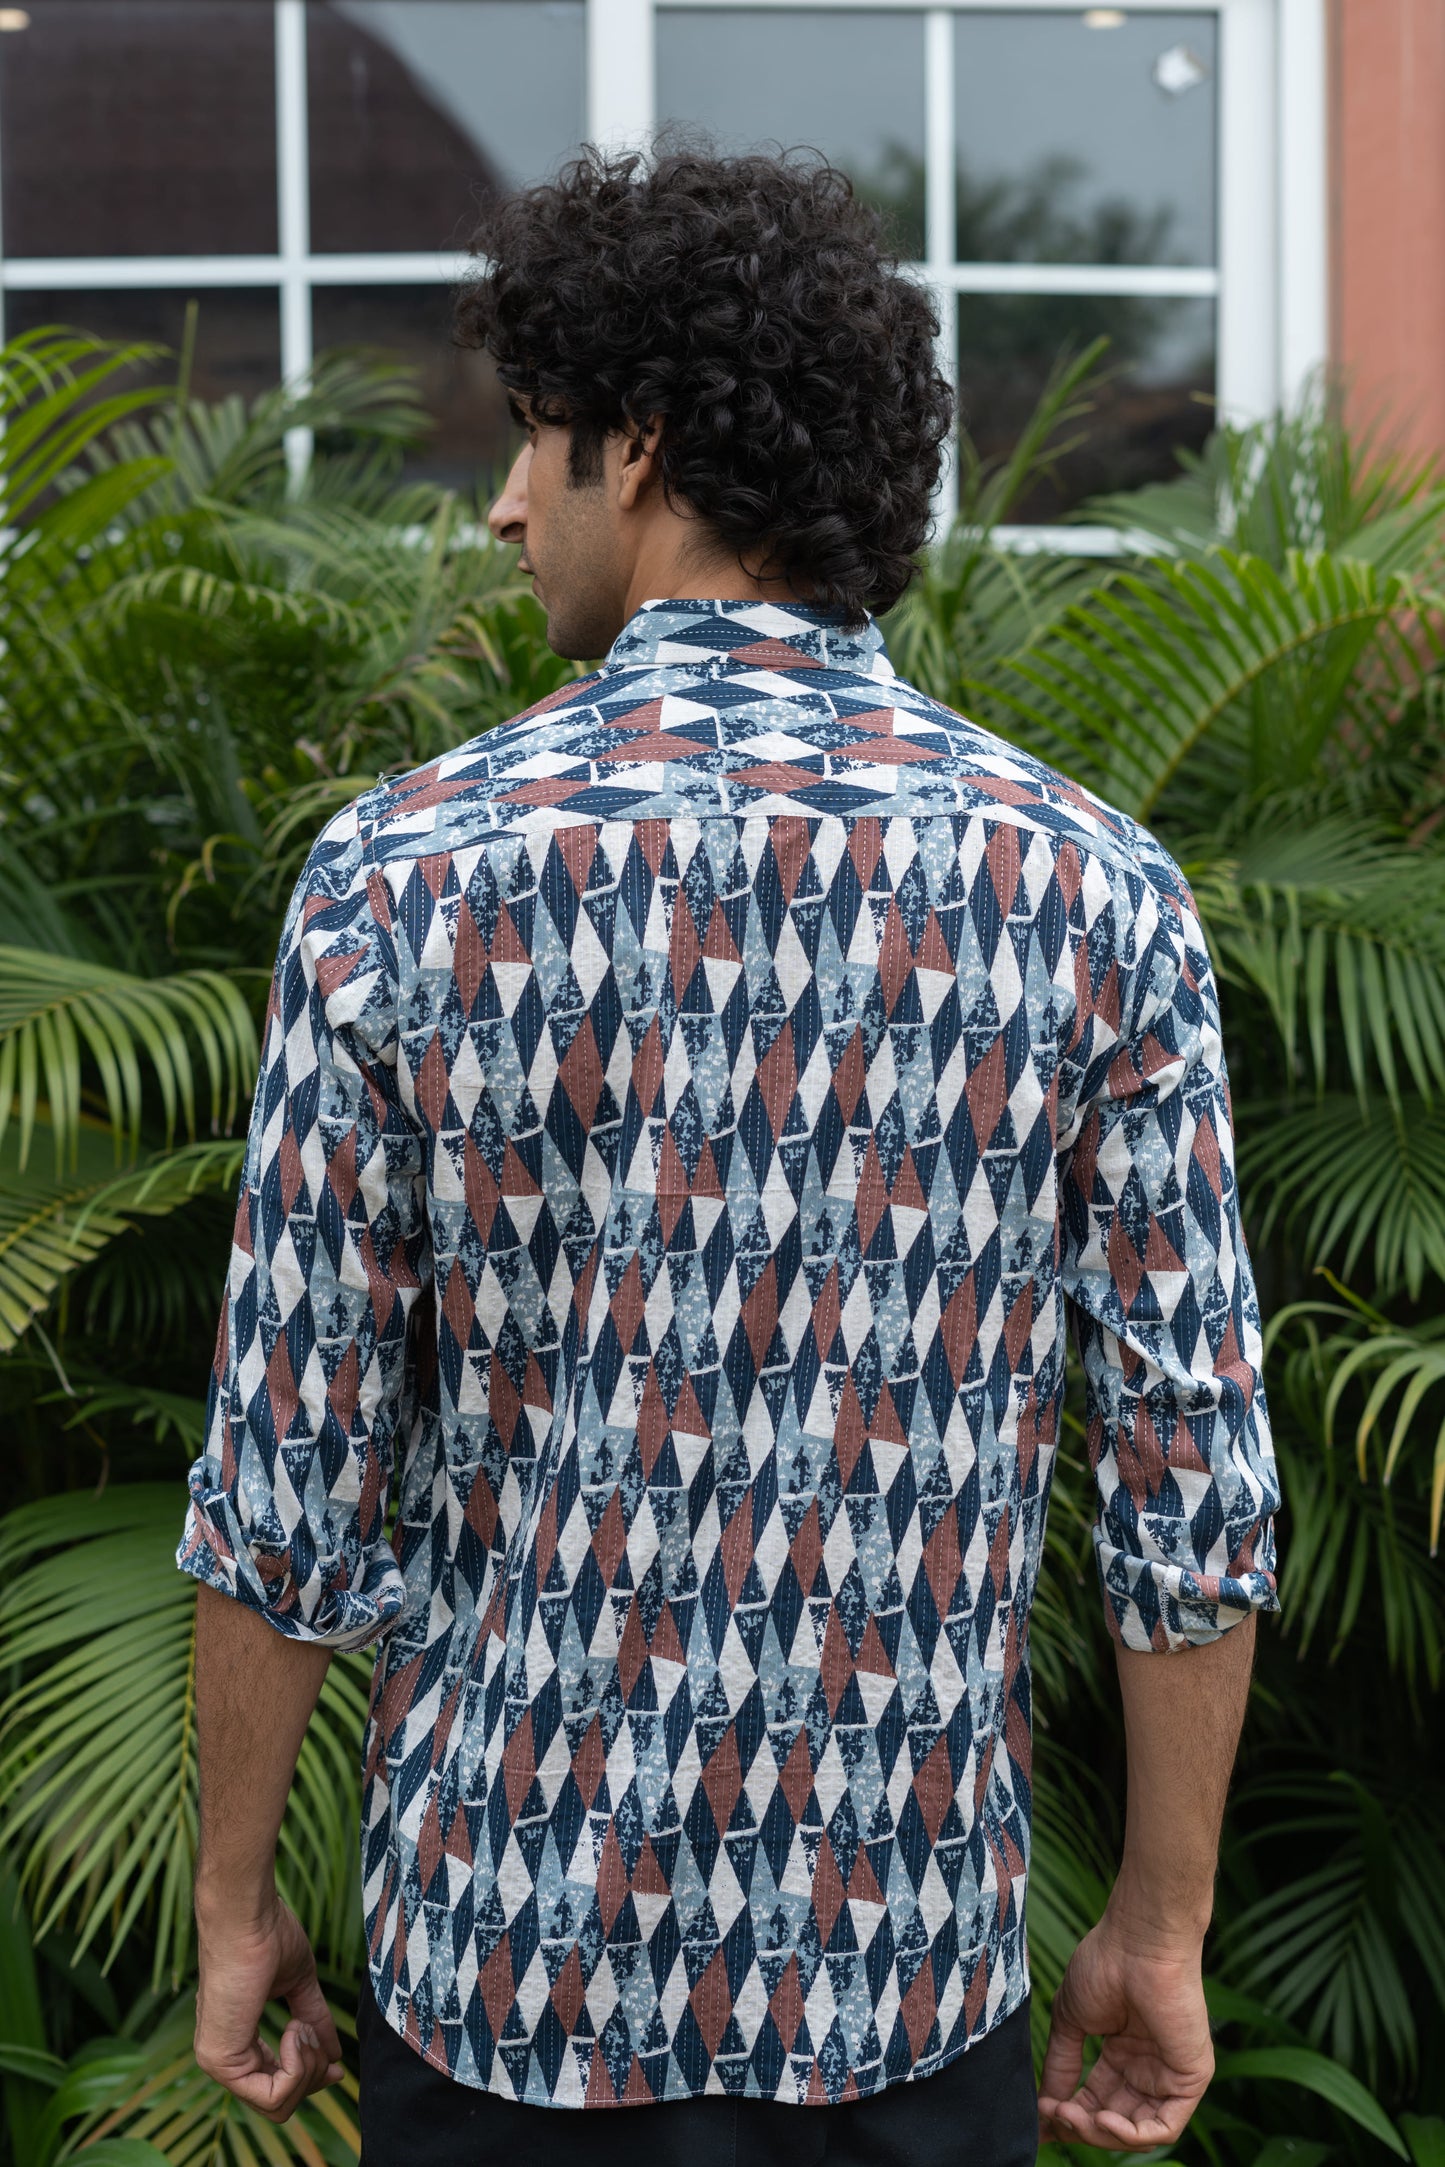 The Blue-White Abstract Geometric Print Kantha Work Shirt